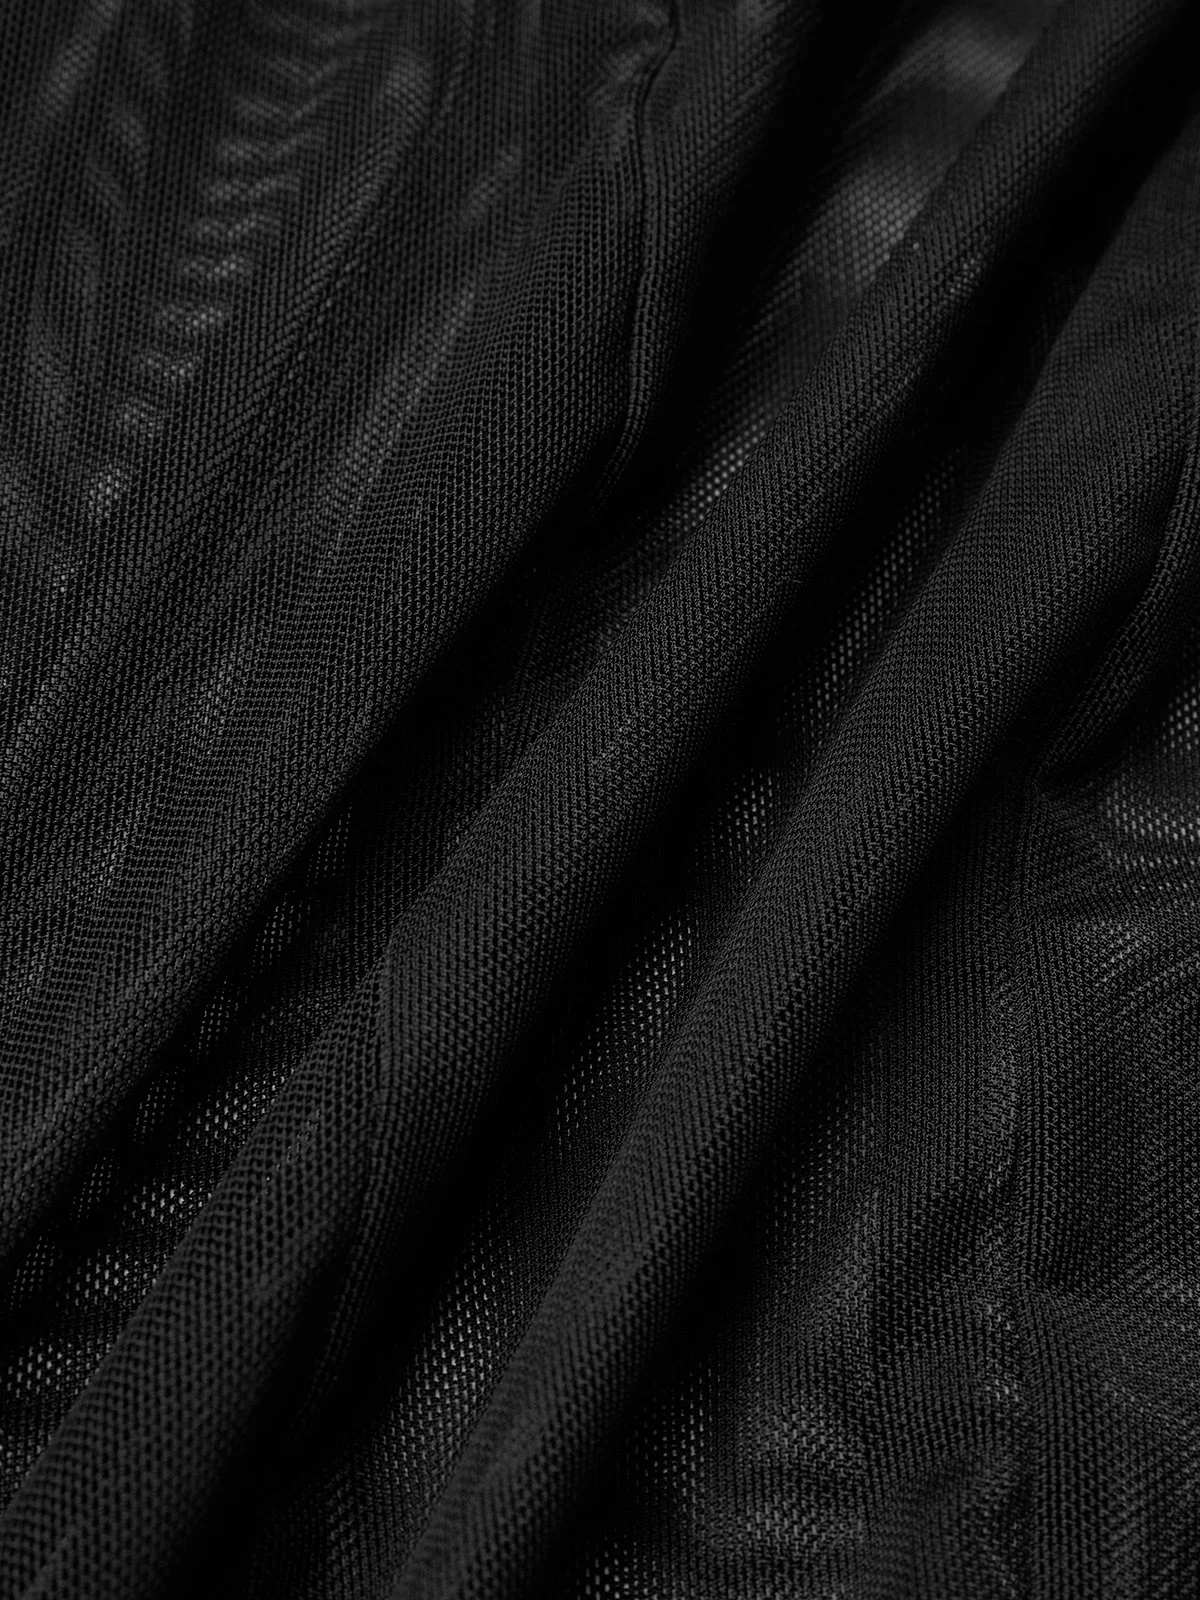 mesh cut out Strapless Plain Sleeveless Maxi Dress